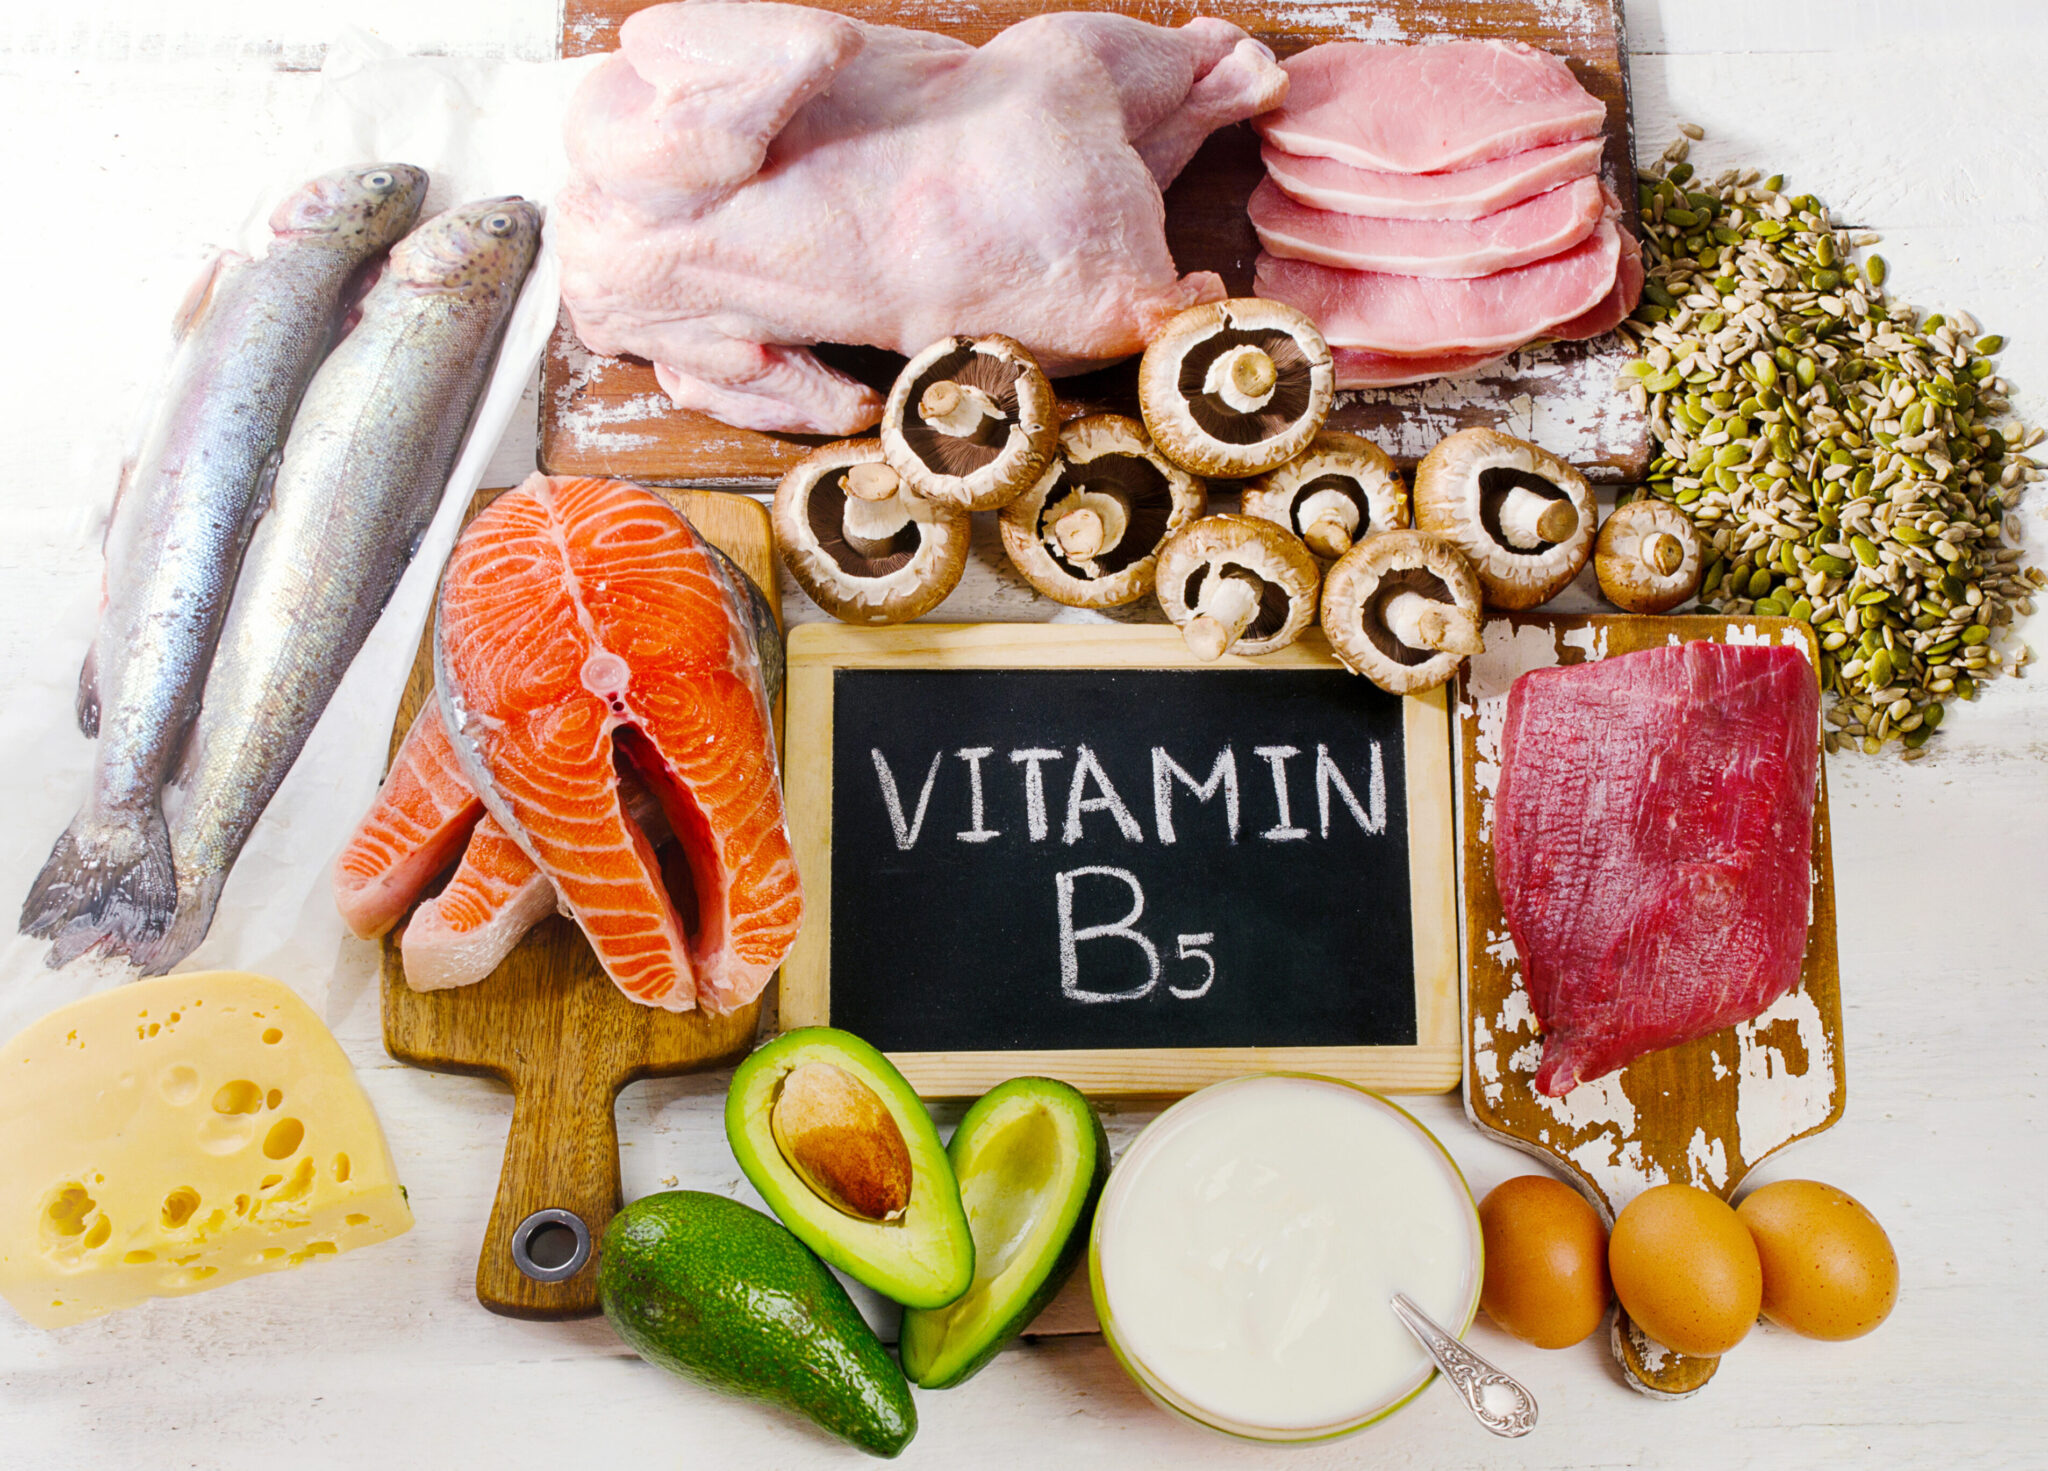 Vitamin com. B5 пантотеновая кислота. Витамины группы б5. Витамин b5. Источники витамина b5.